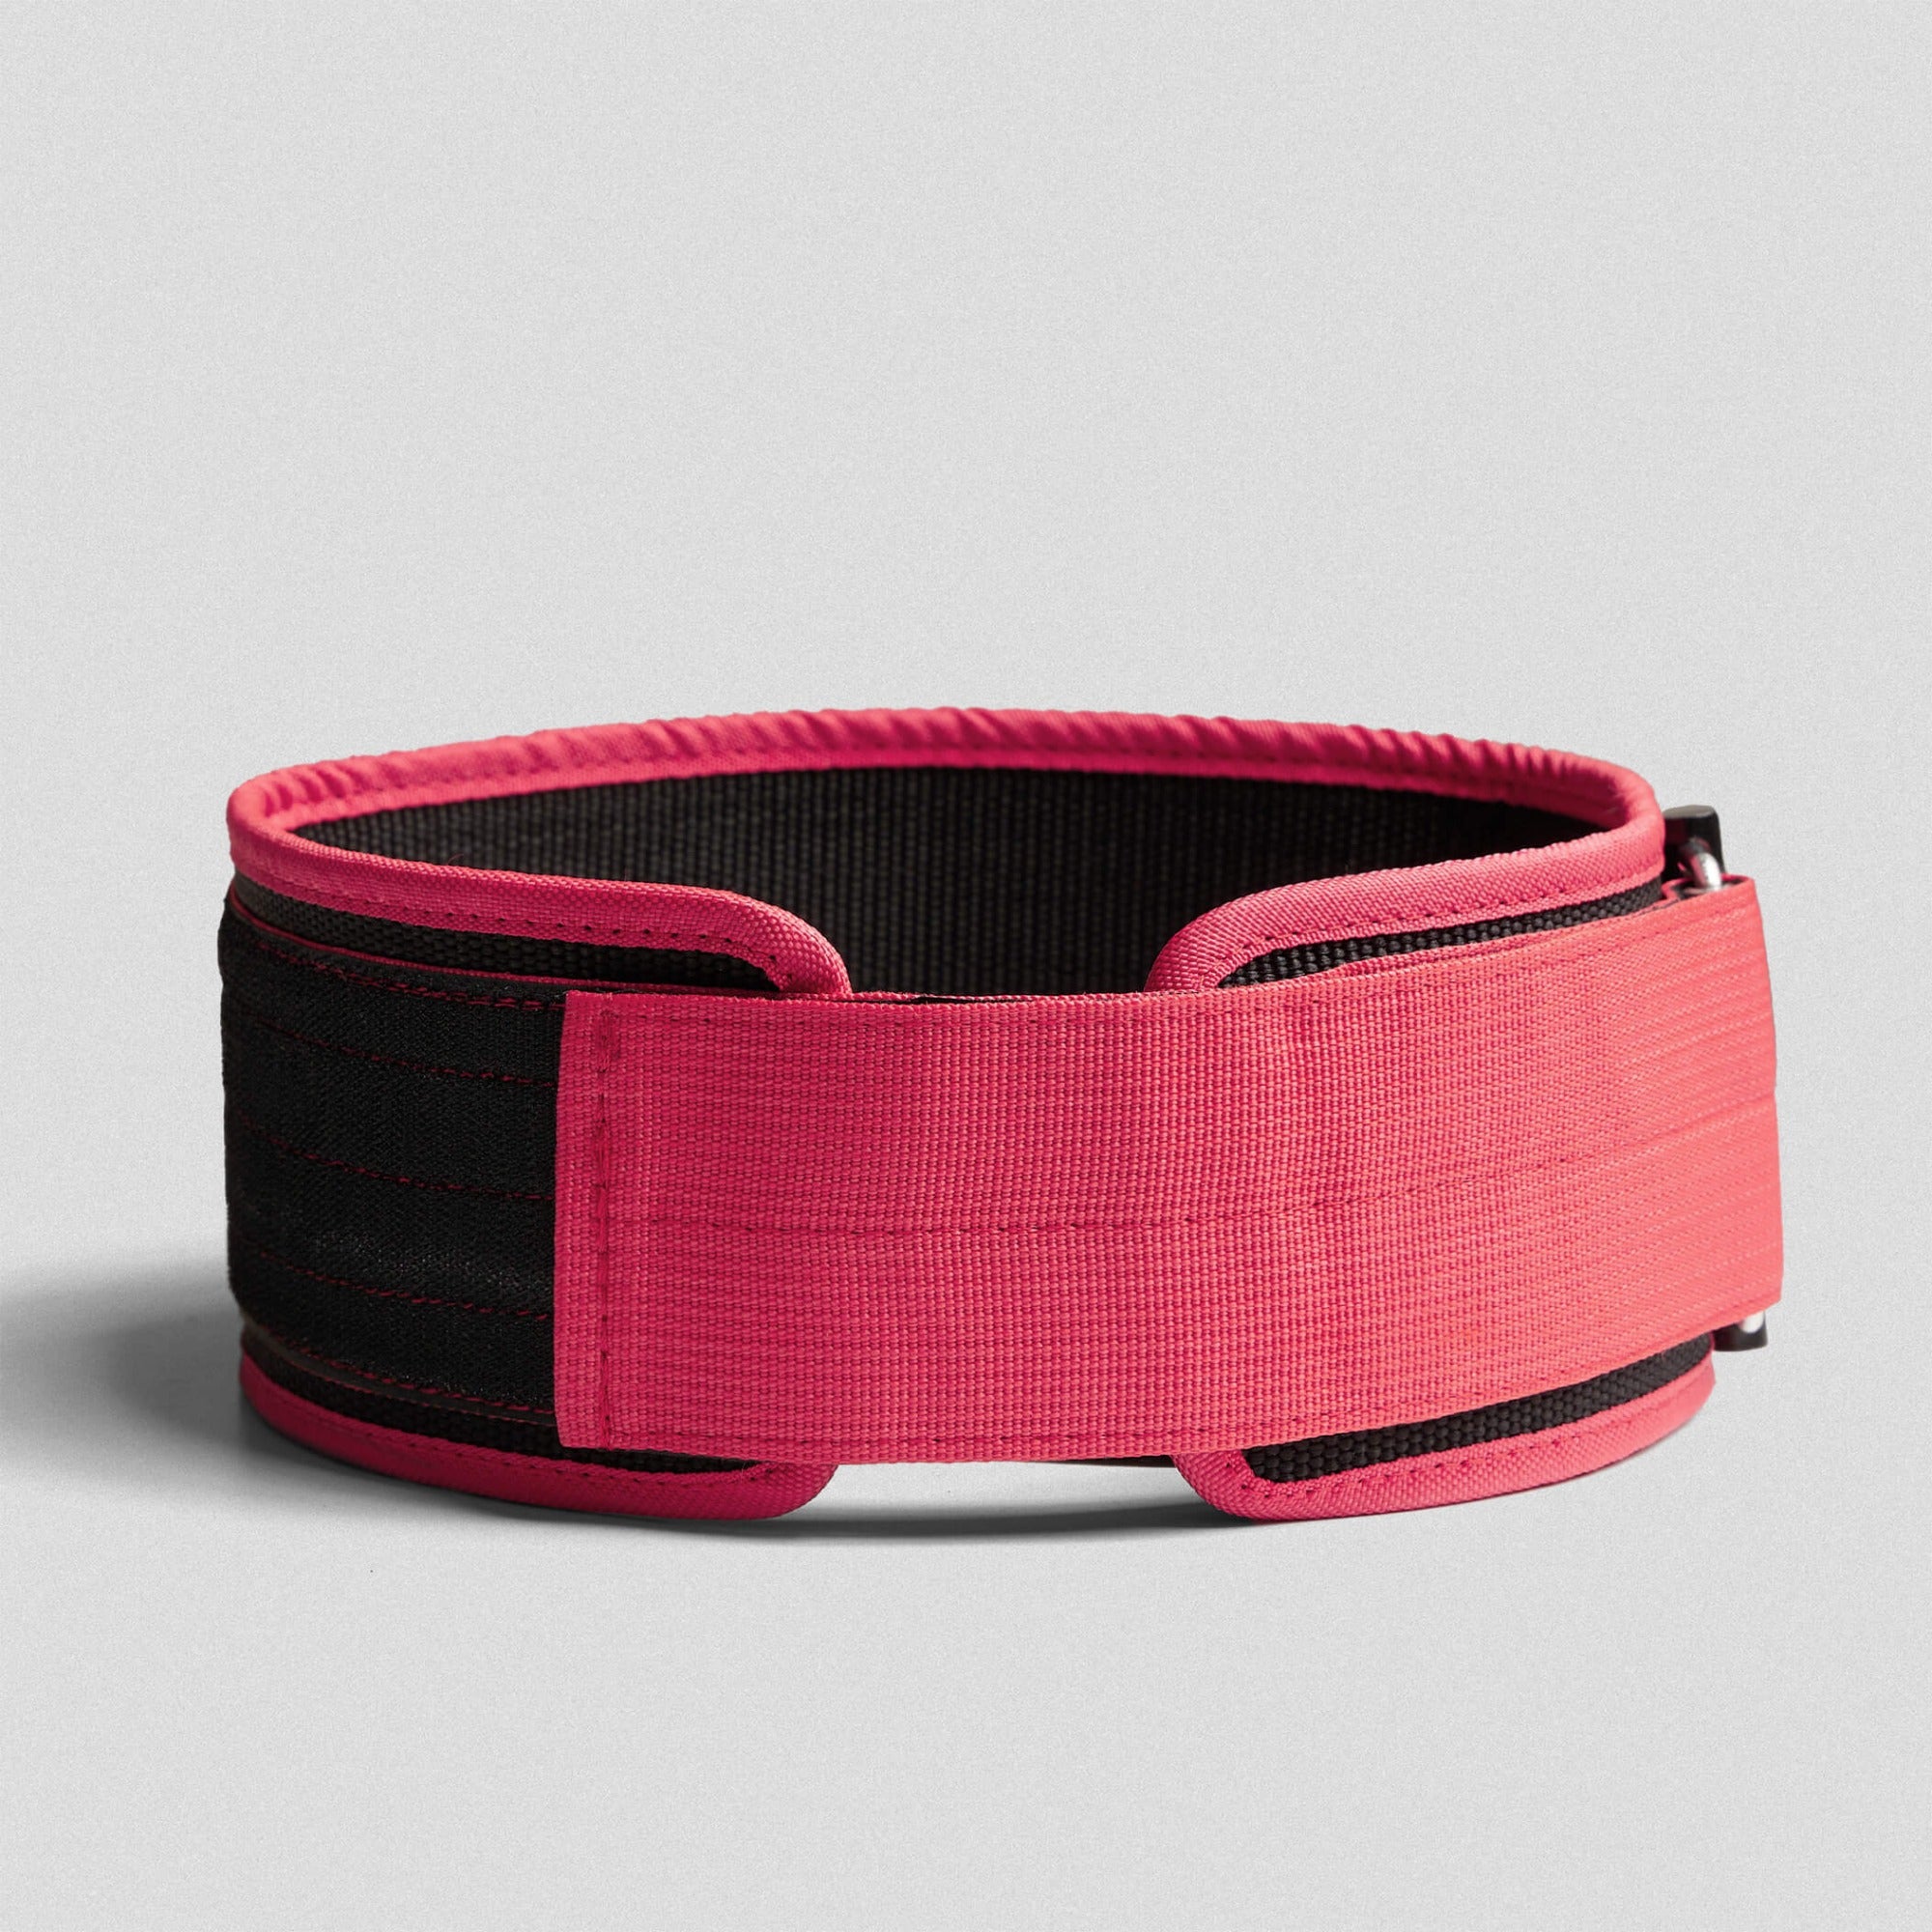 quick lock belt pink strapped